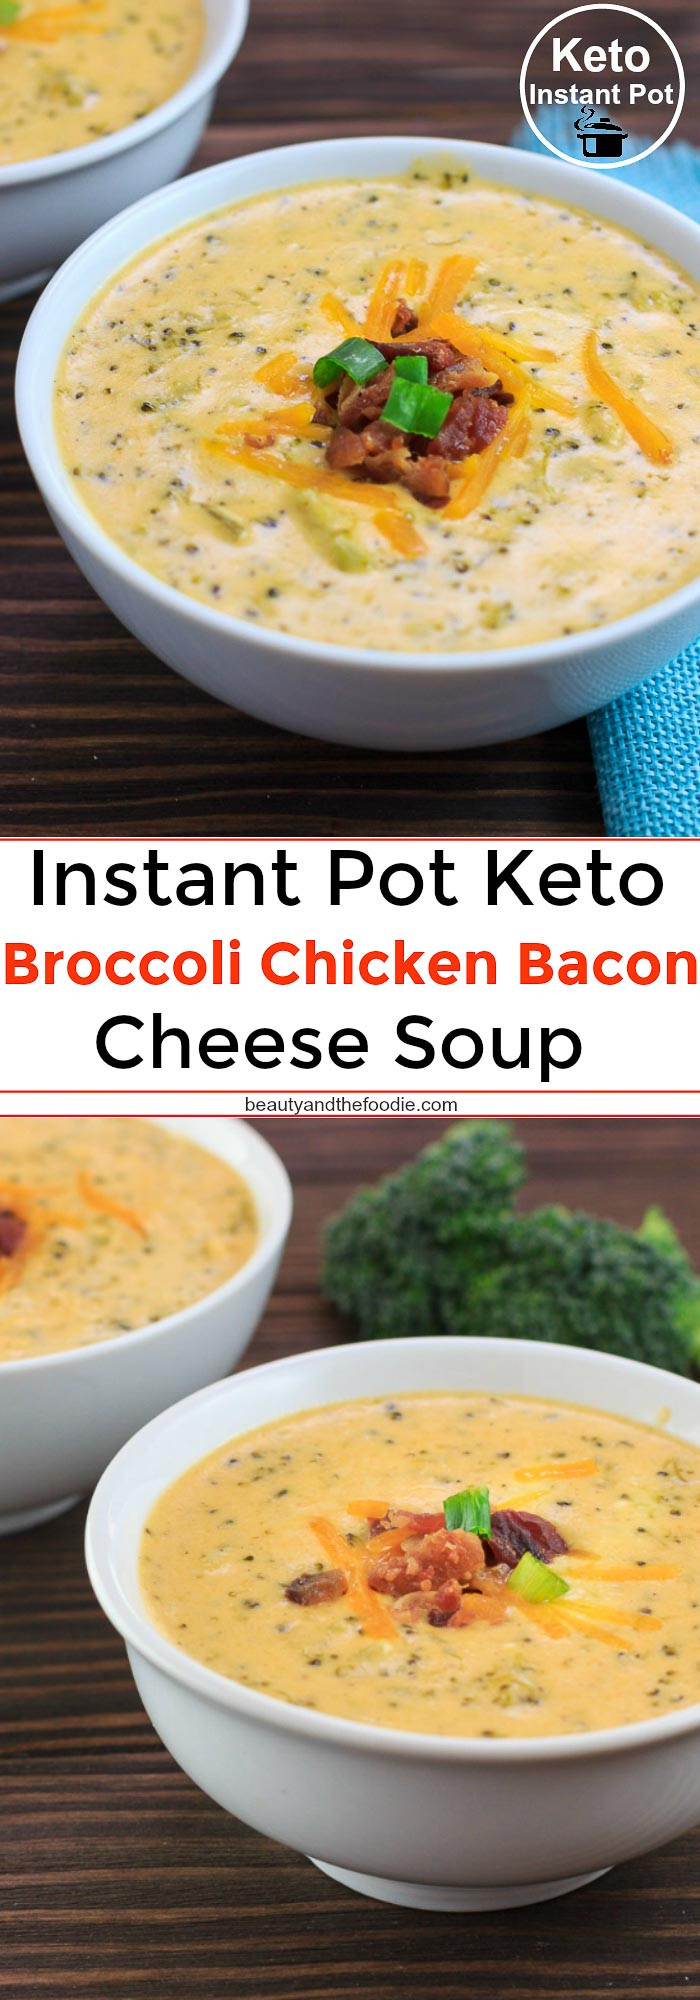 Instapot Keto Broccoli Cheese Soup
 Instant Pot Keto Broccoli Chicken Bacon Cheese Soup